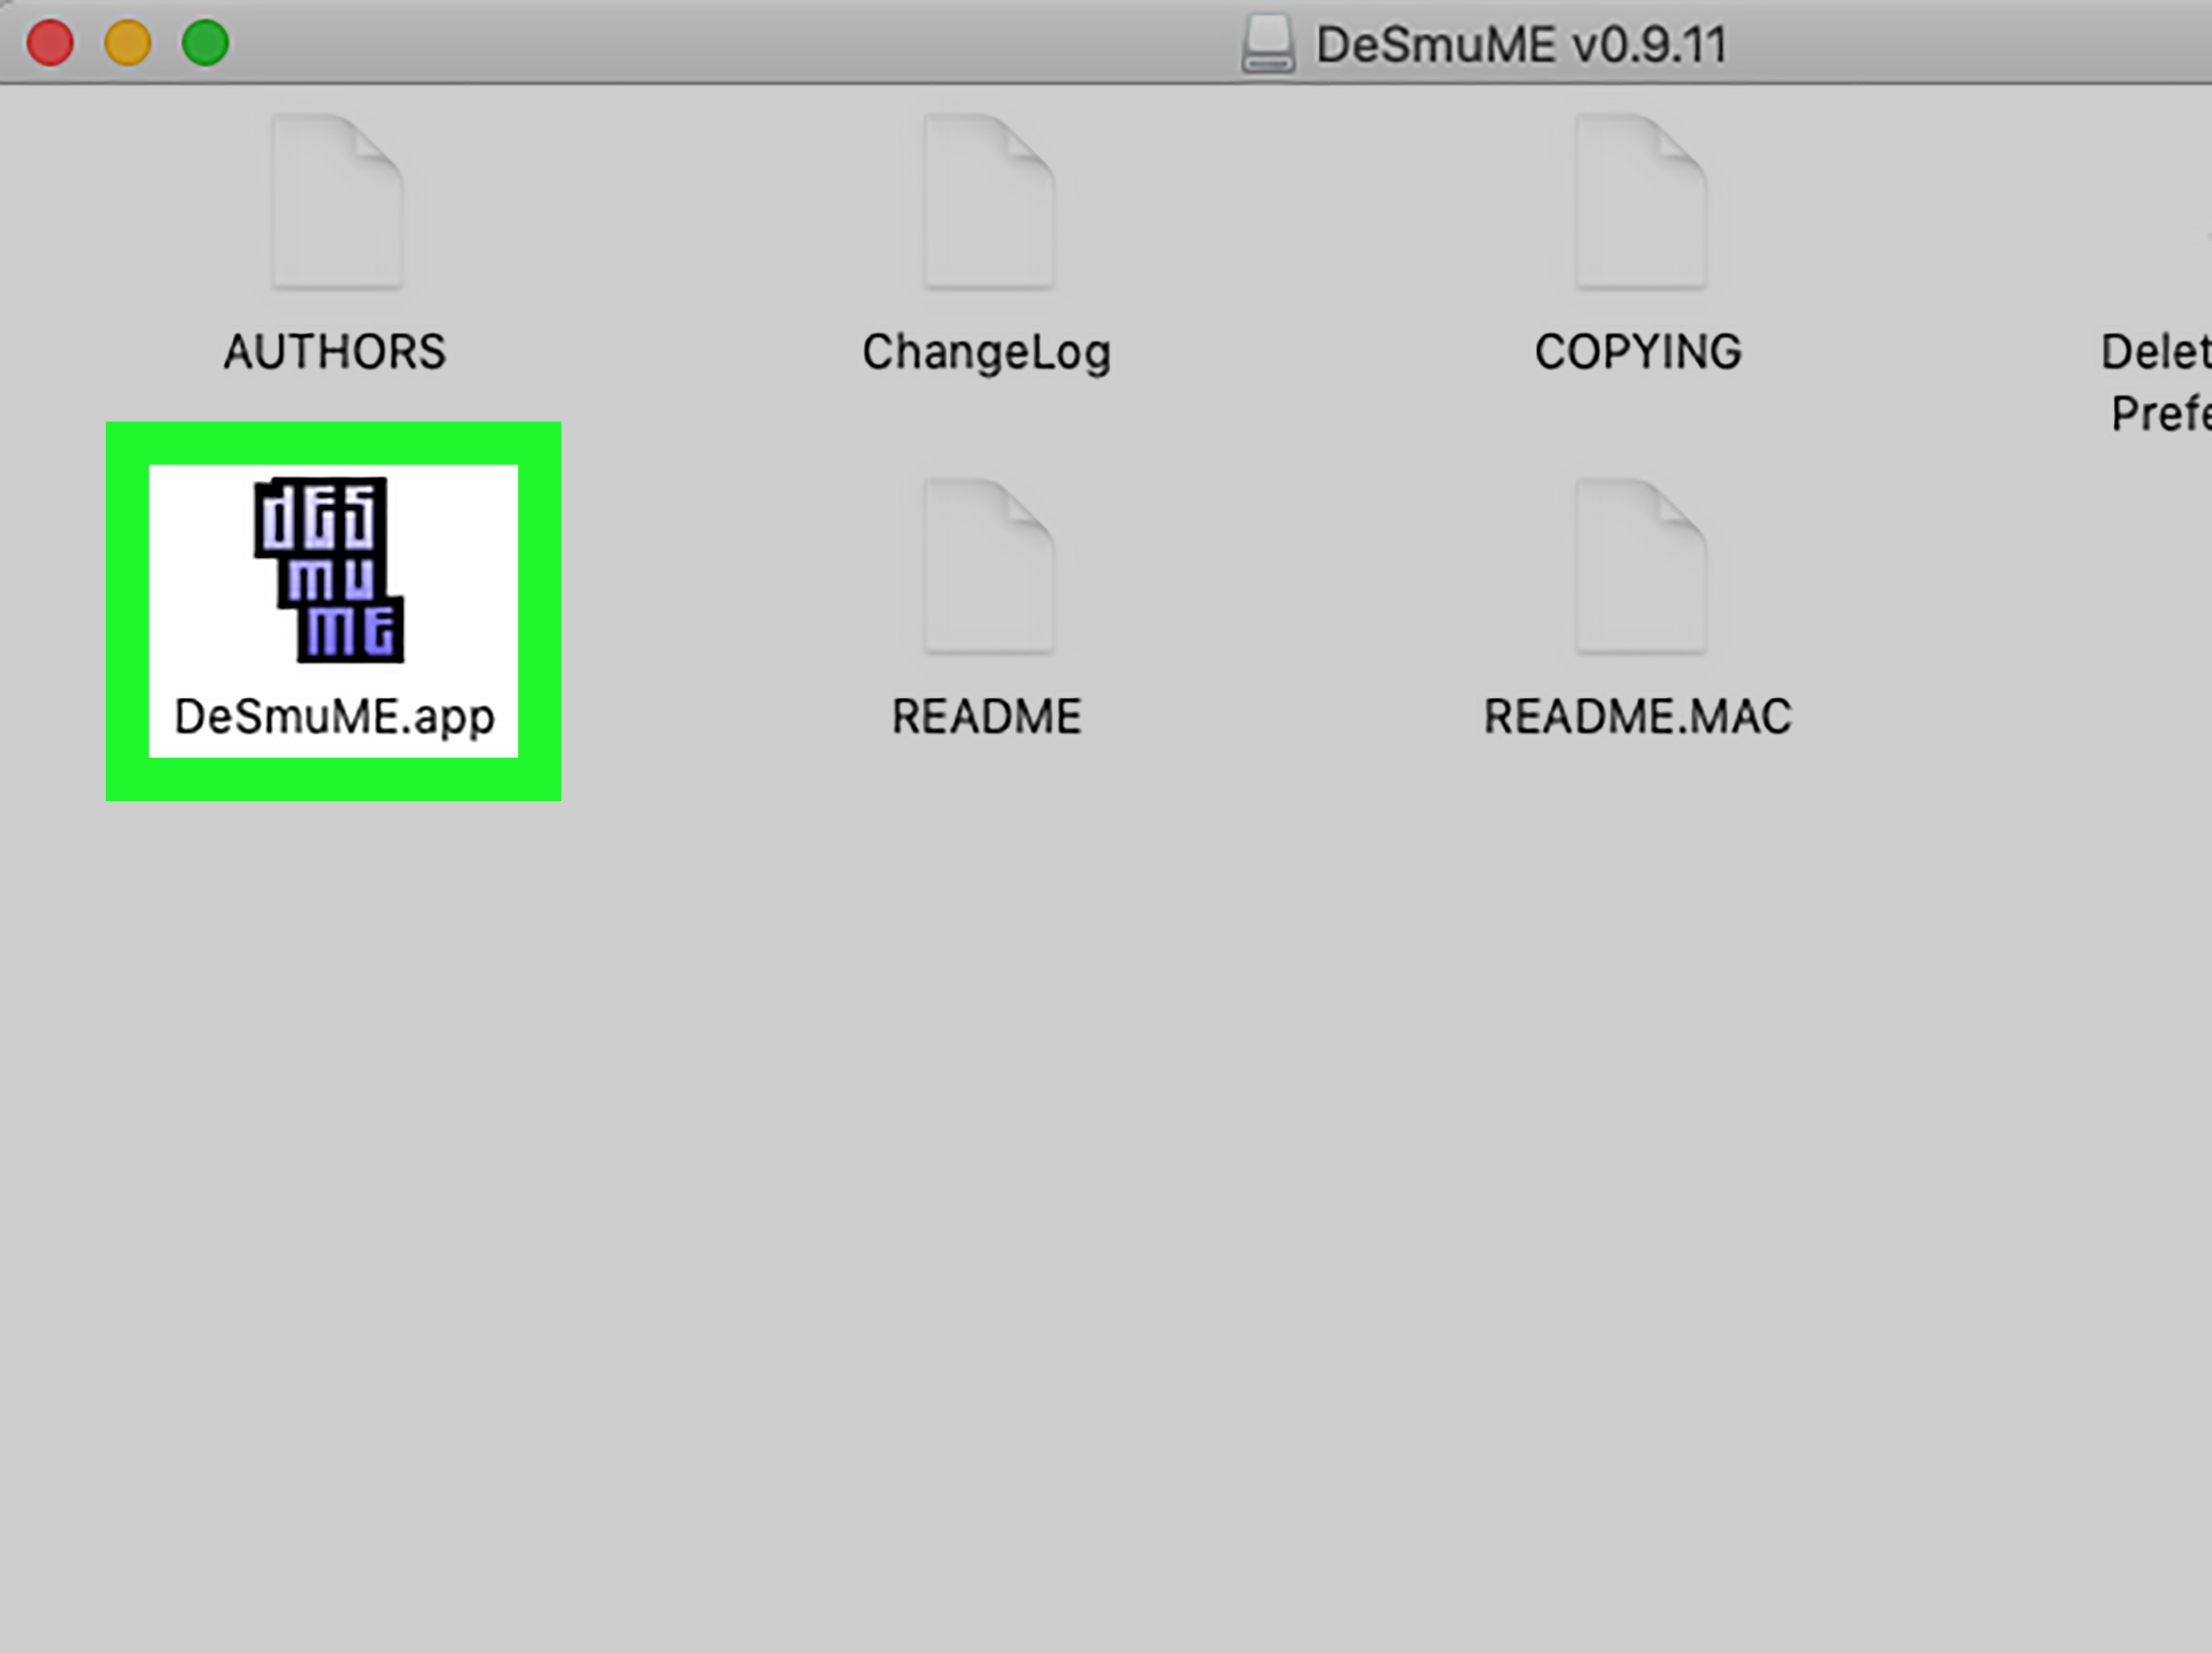 nintendo ds emulator download for mac